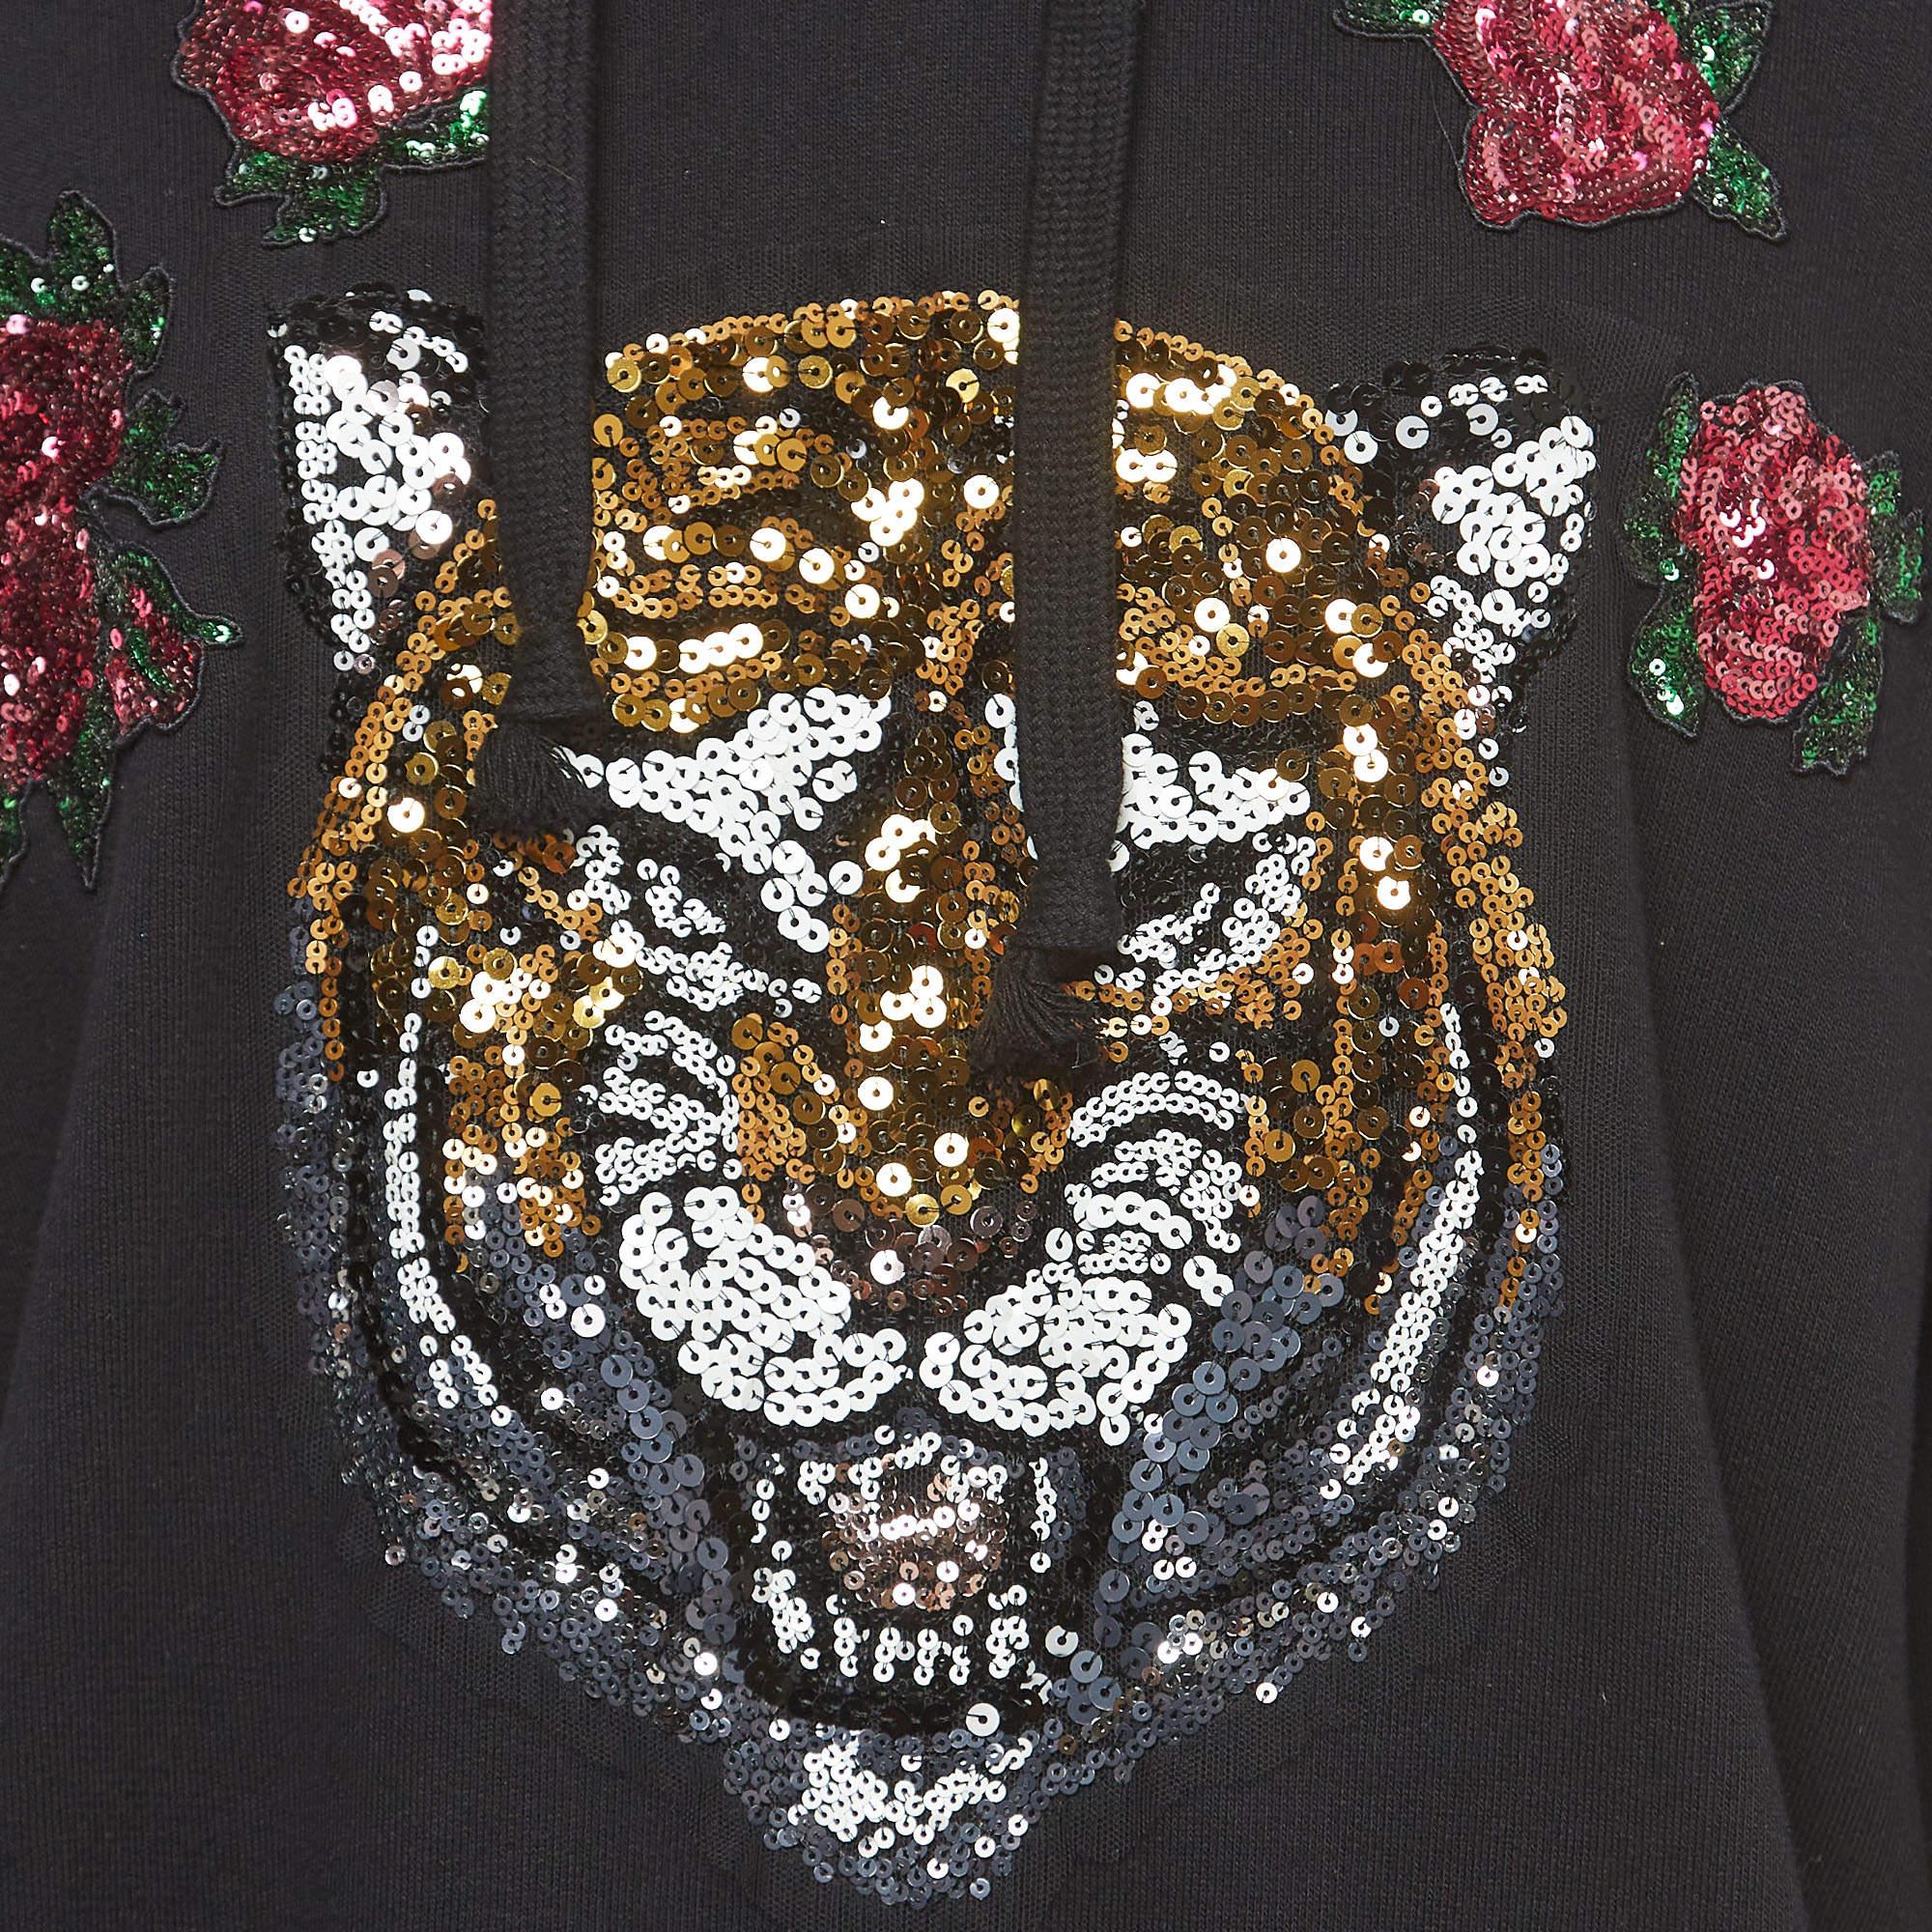 Gucci Black Cotton Knit Embroidered Hooded Sweatshirt M In Good Condition For Sale In Dubai, Al Qouz 2